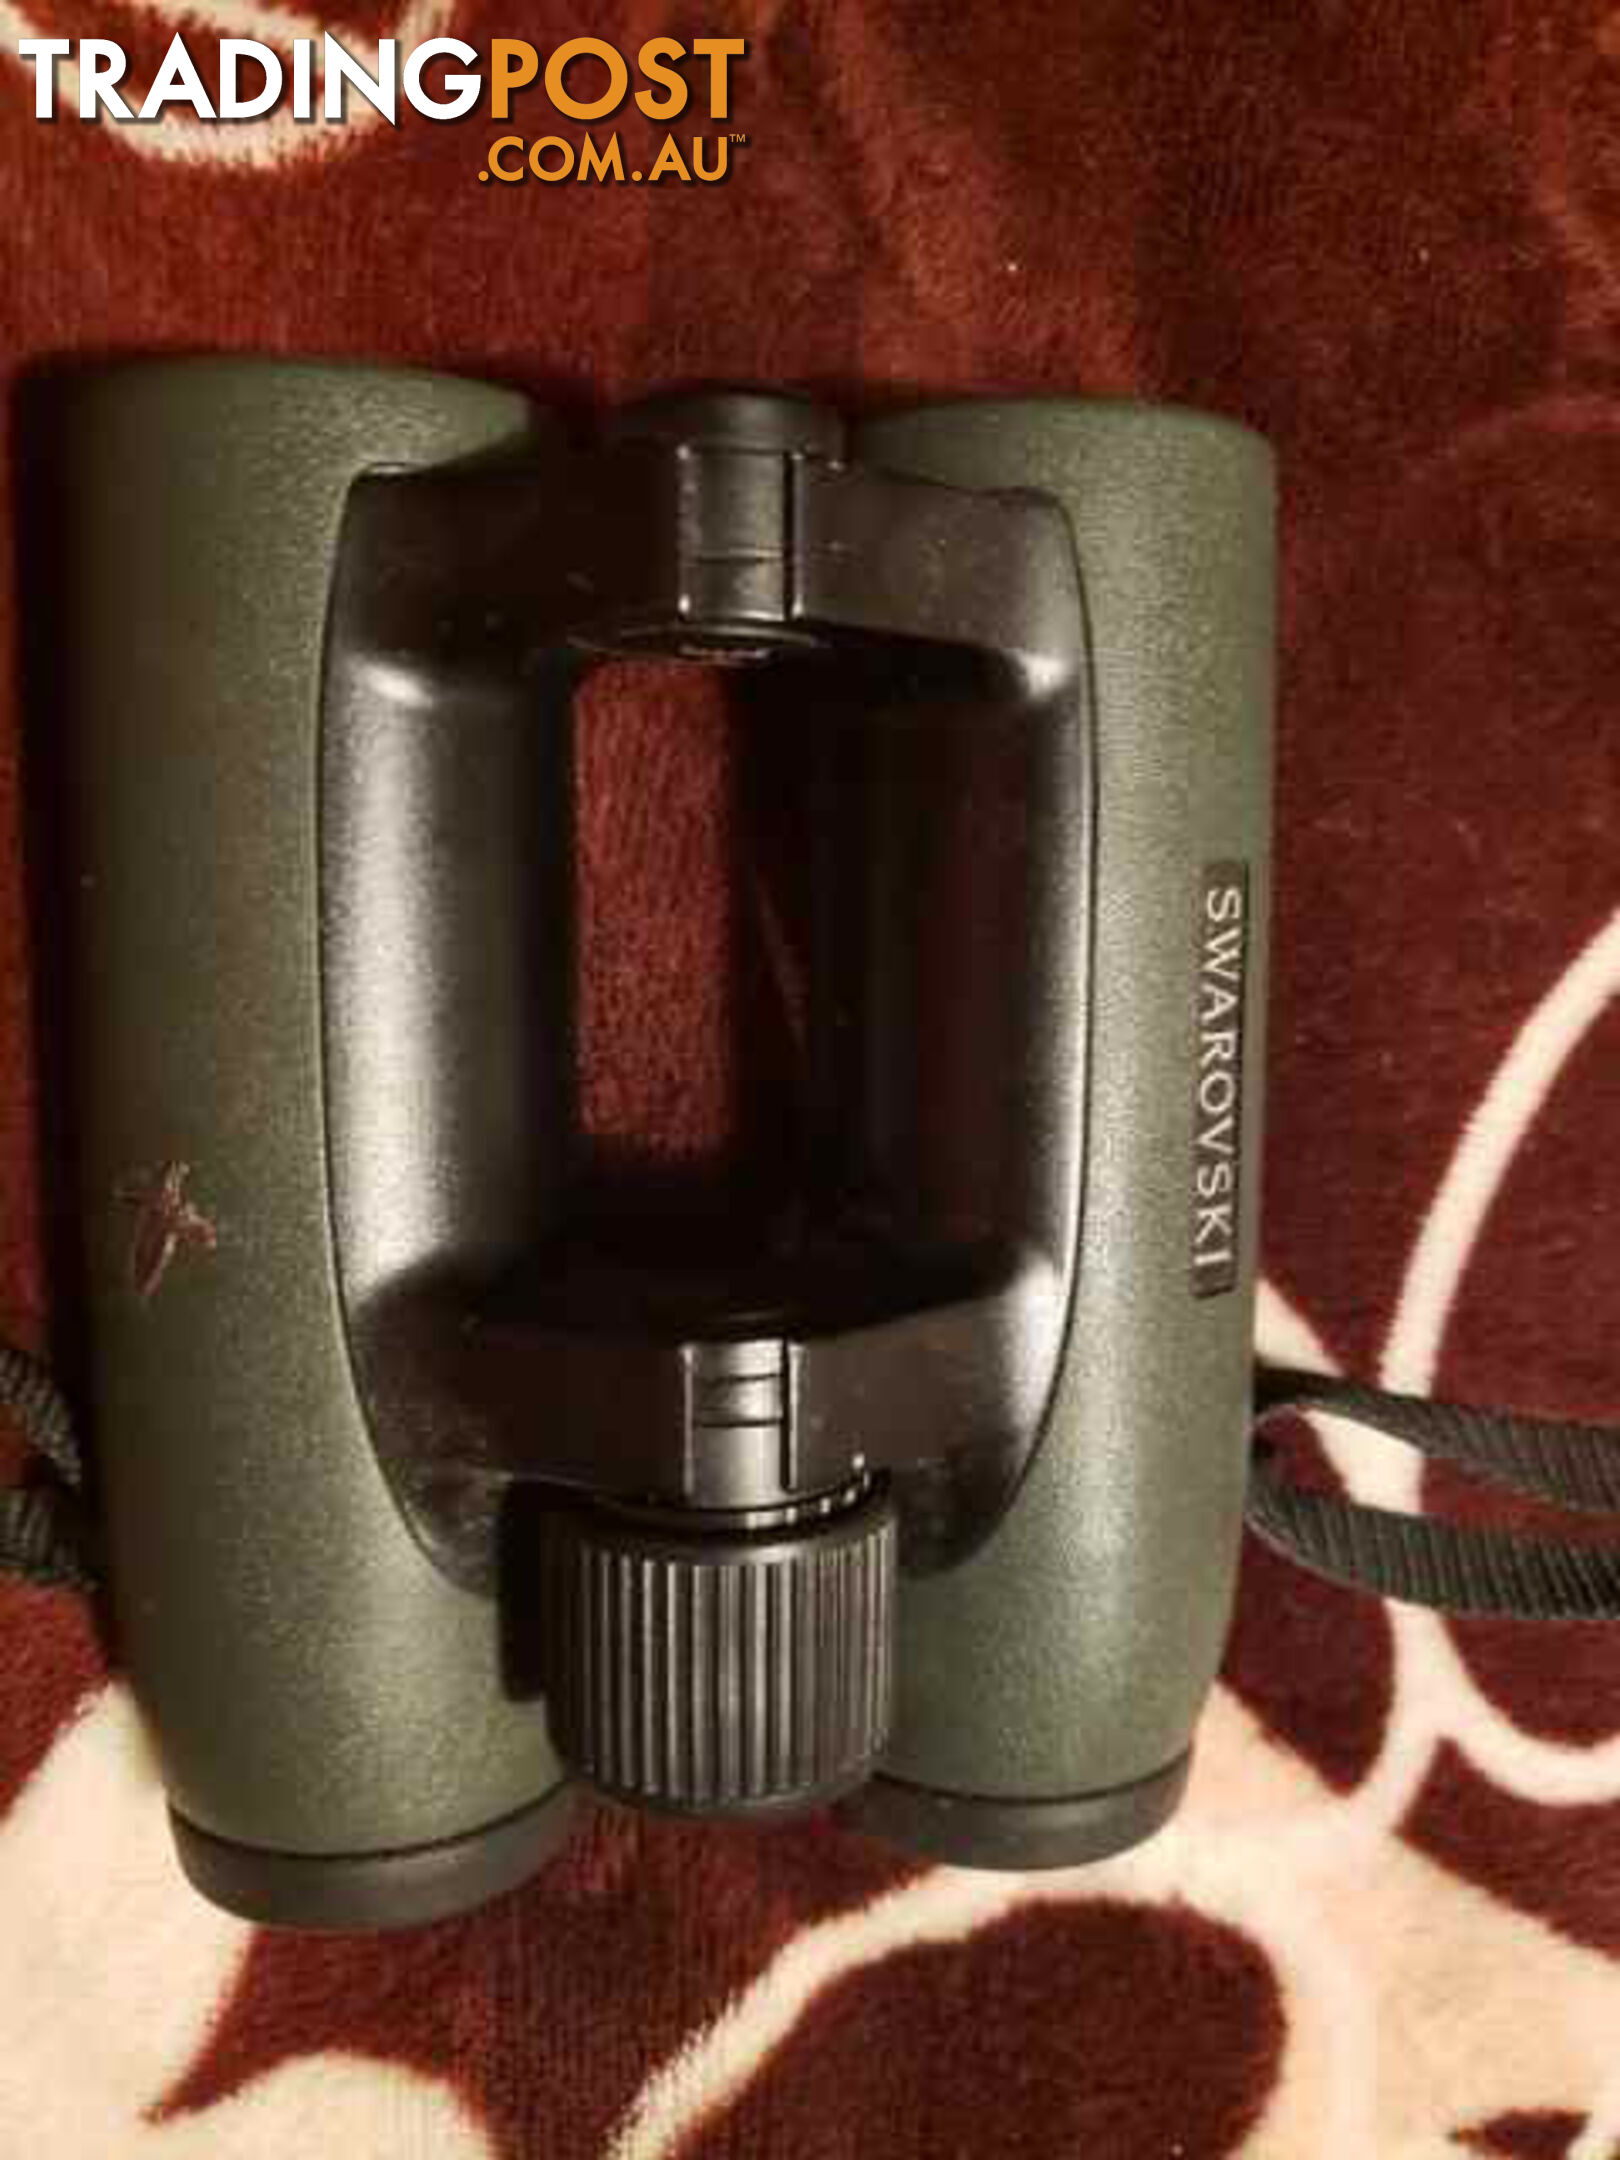 Swarovski El 10x32 binoculars